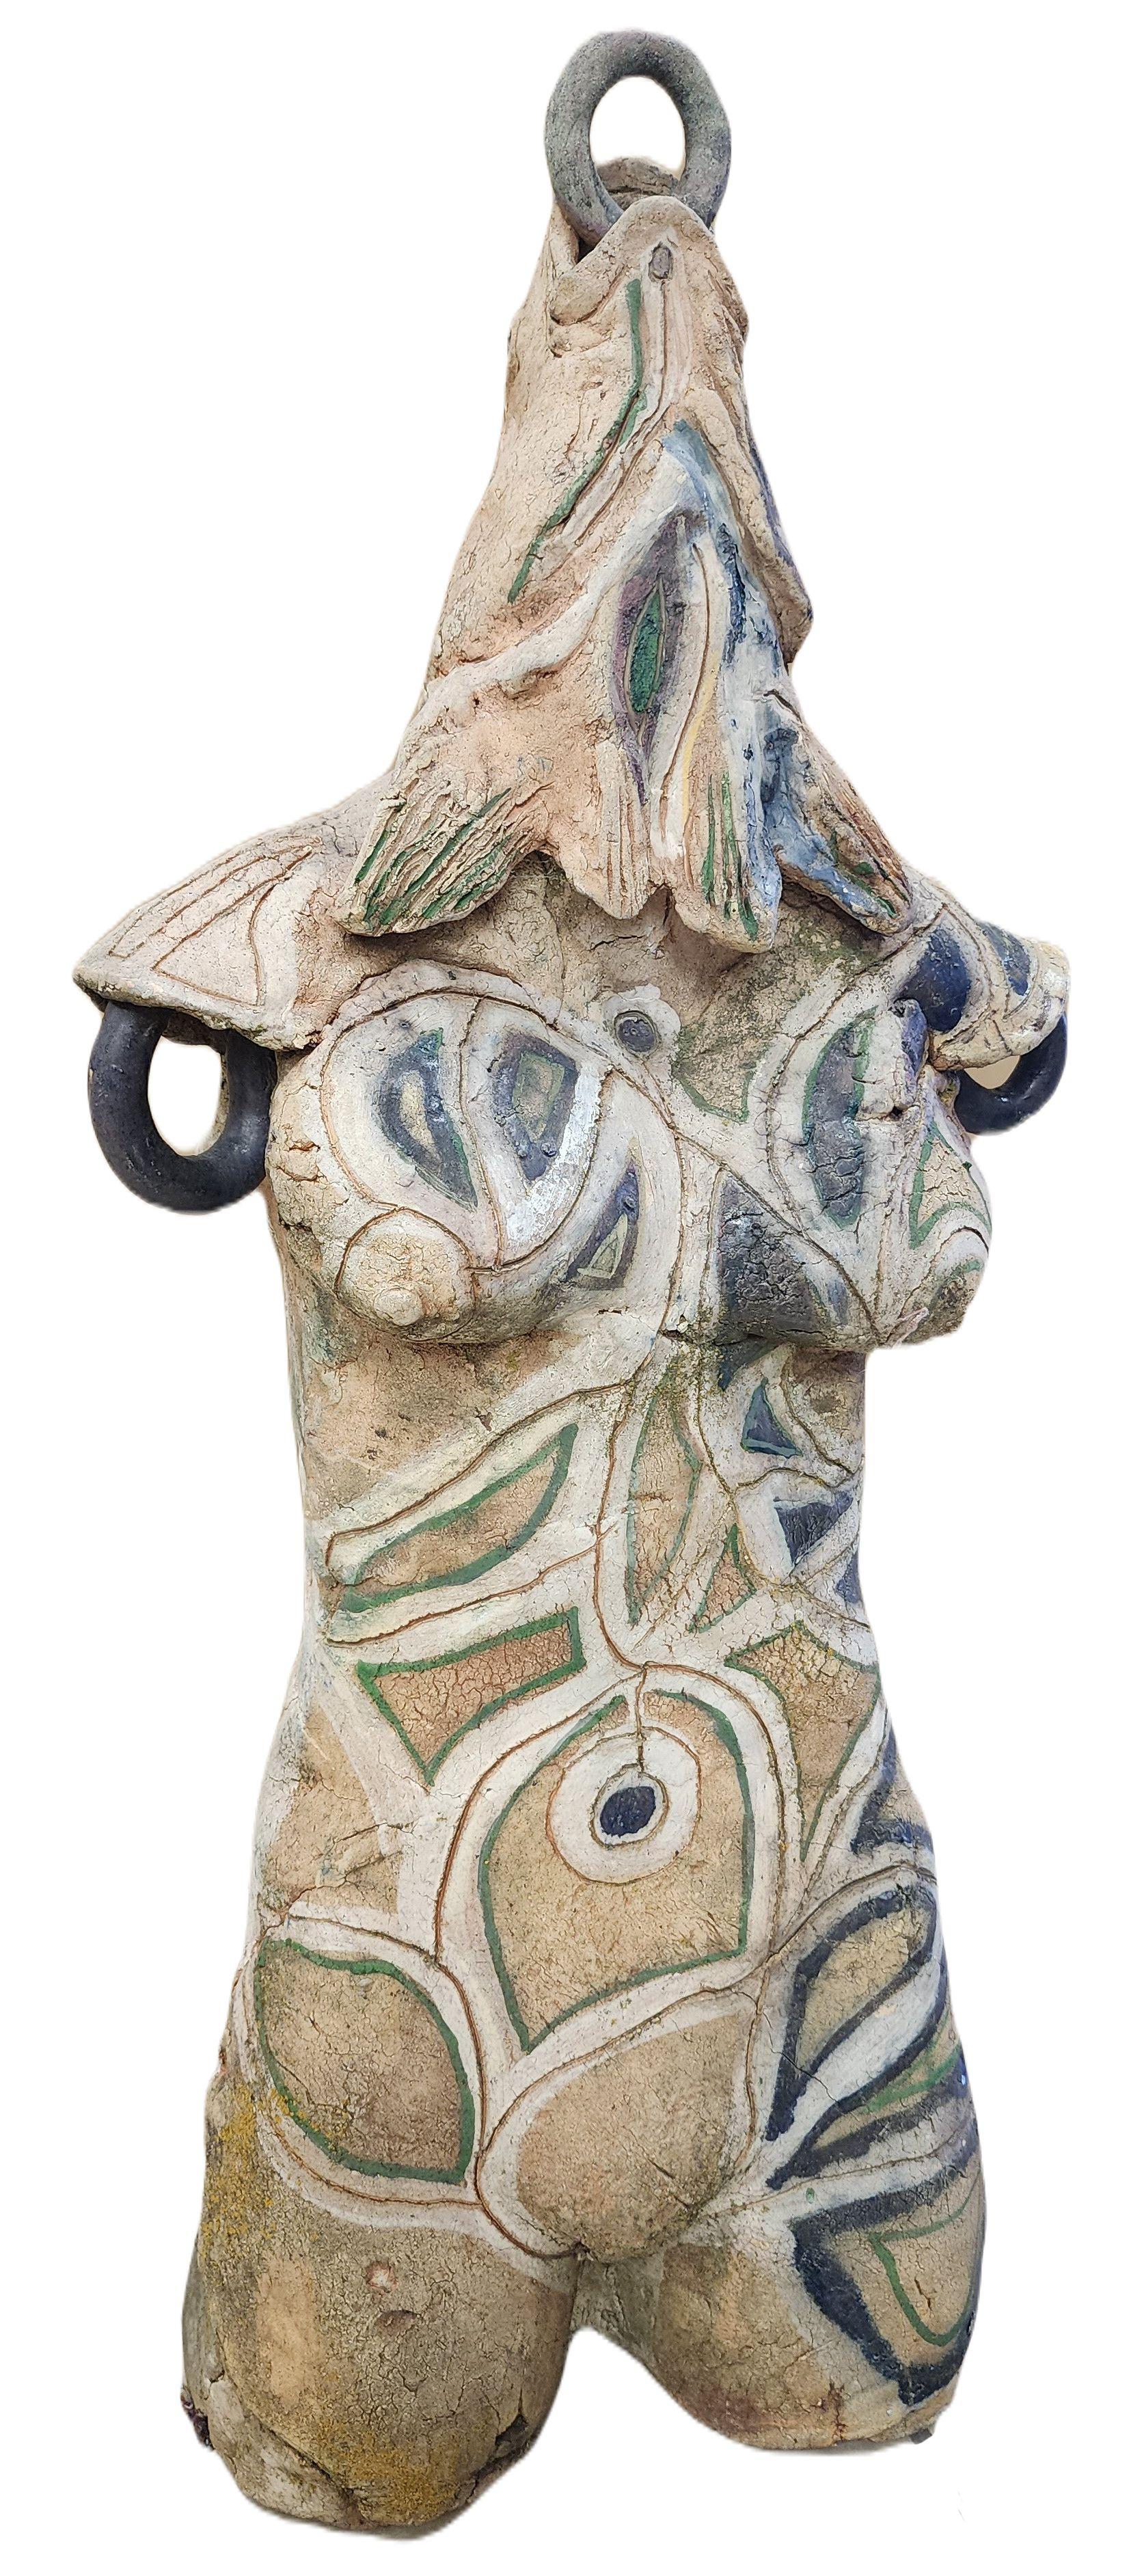 Torso Vessel (Fish Head Woman) - Sculpture by Jim Leedy